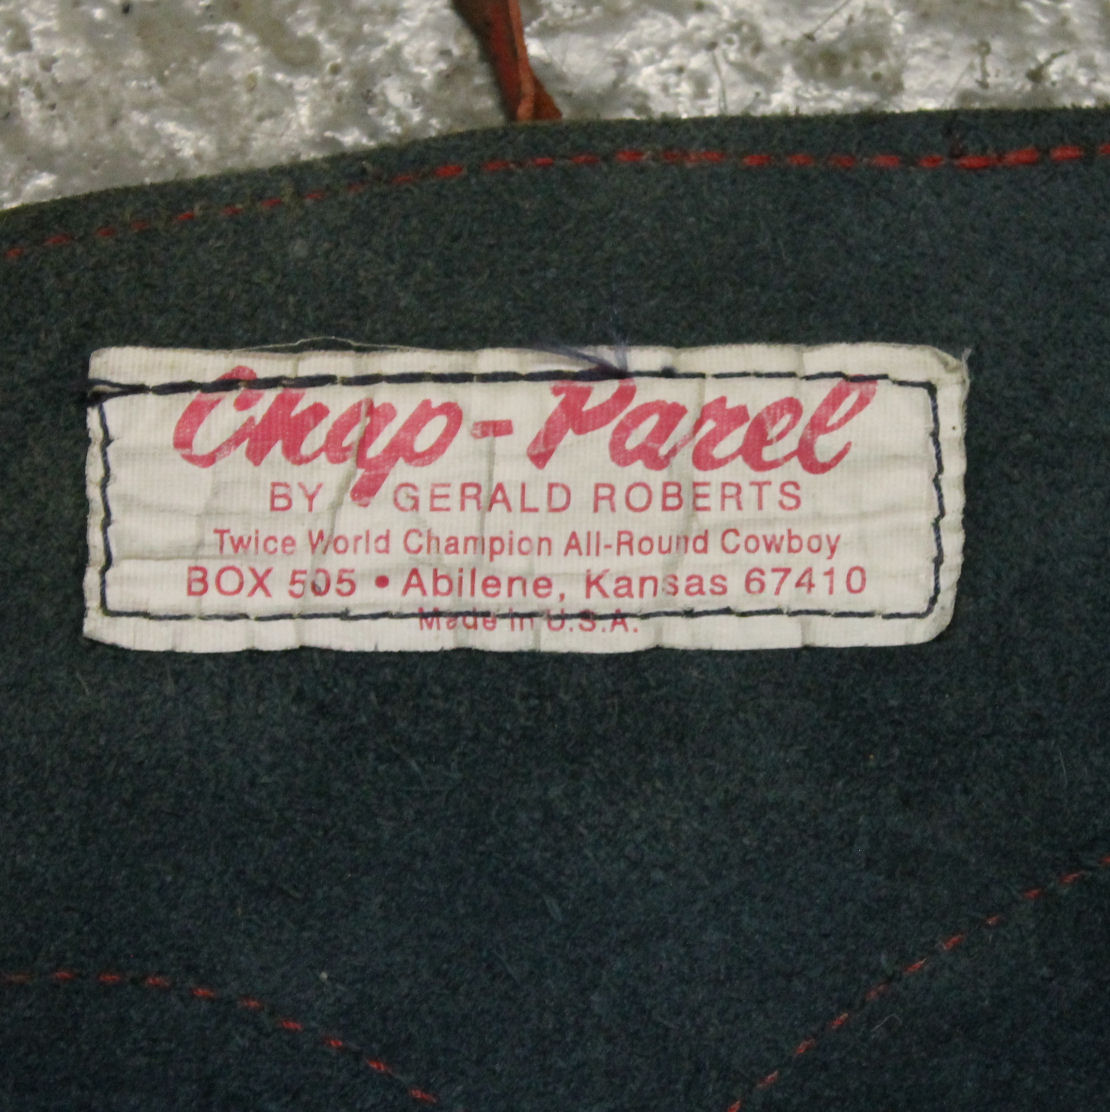 Details about   Vintage Gerald Roberts Chap-Parel Western Boot Bags 